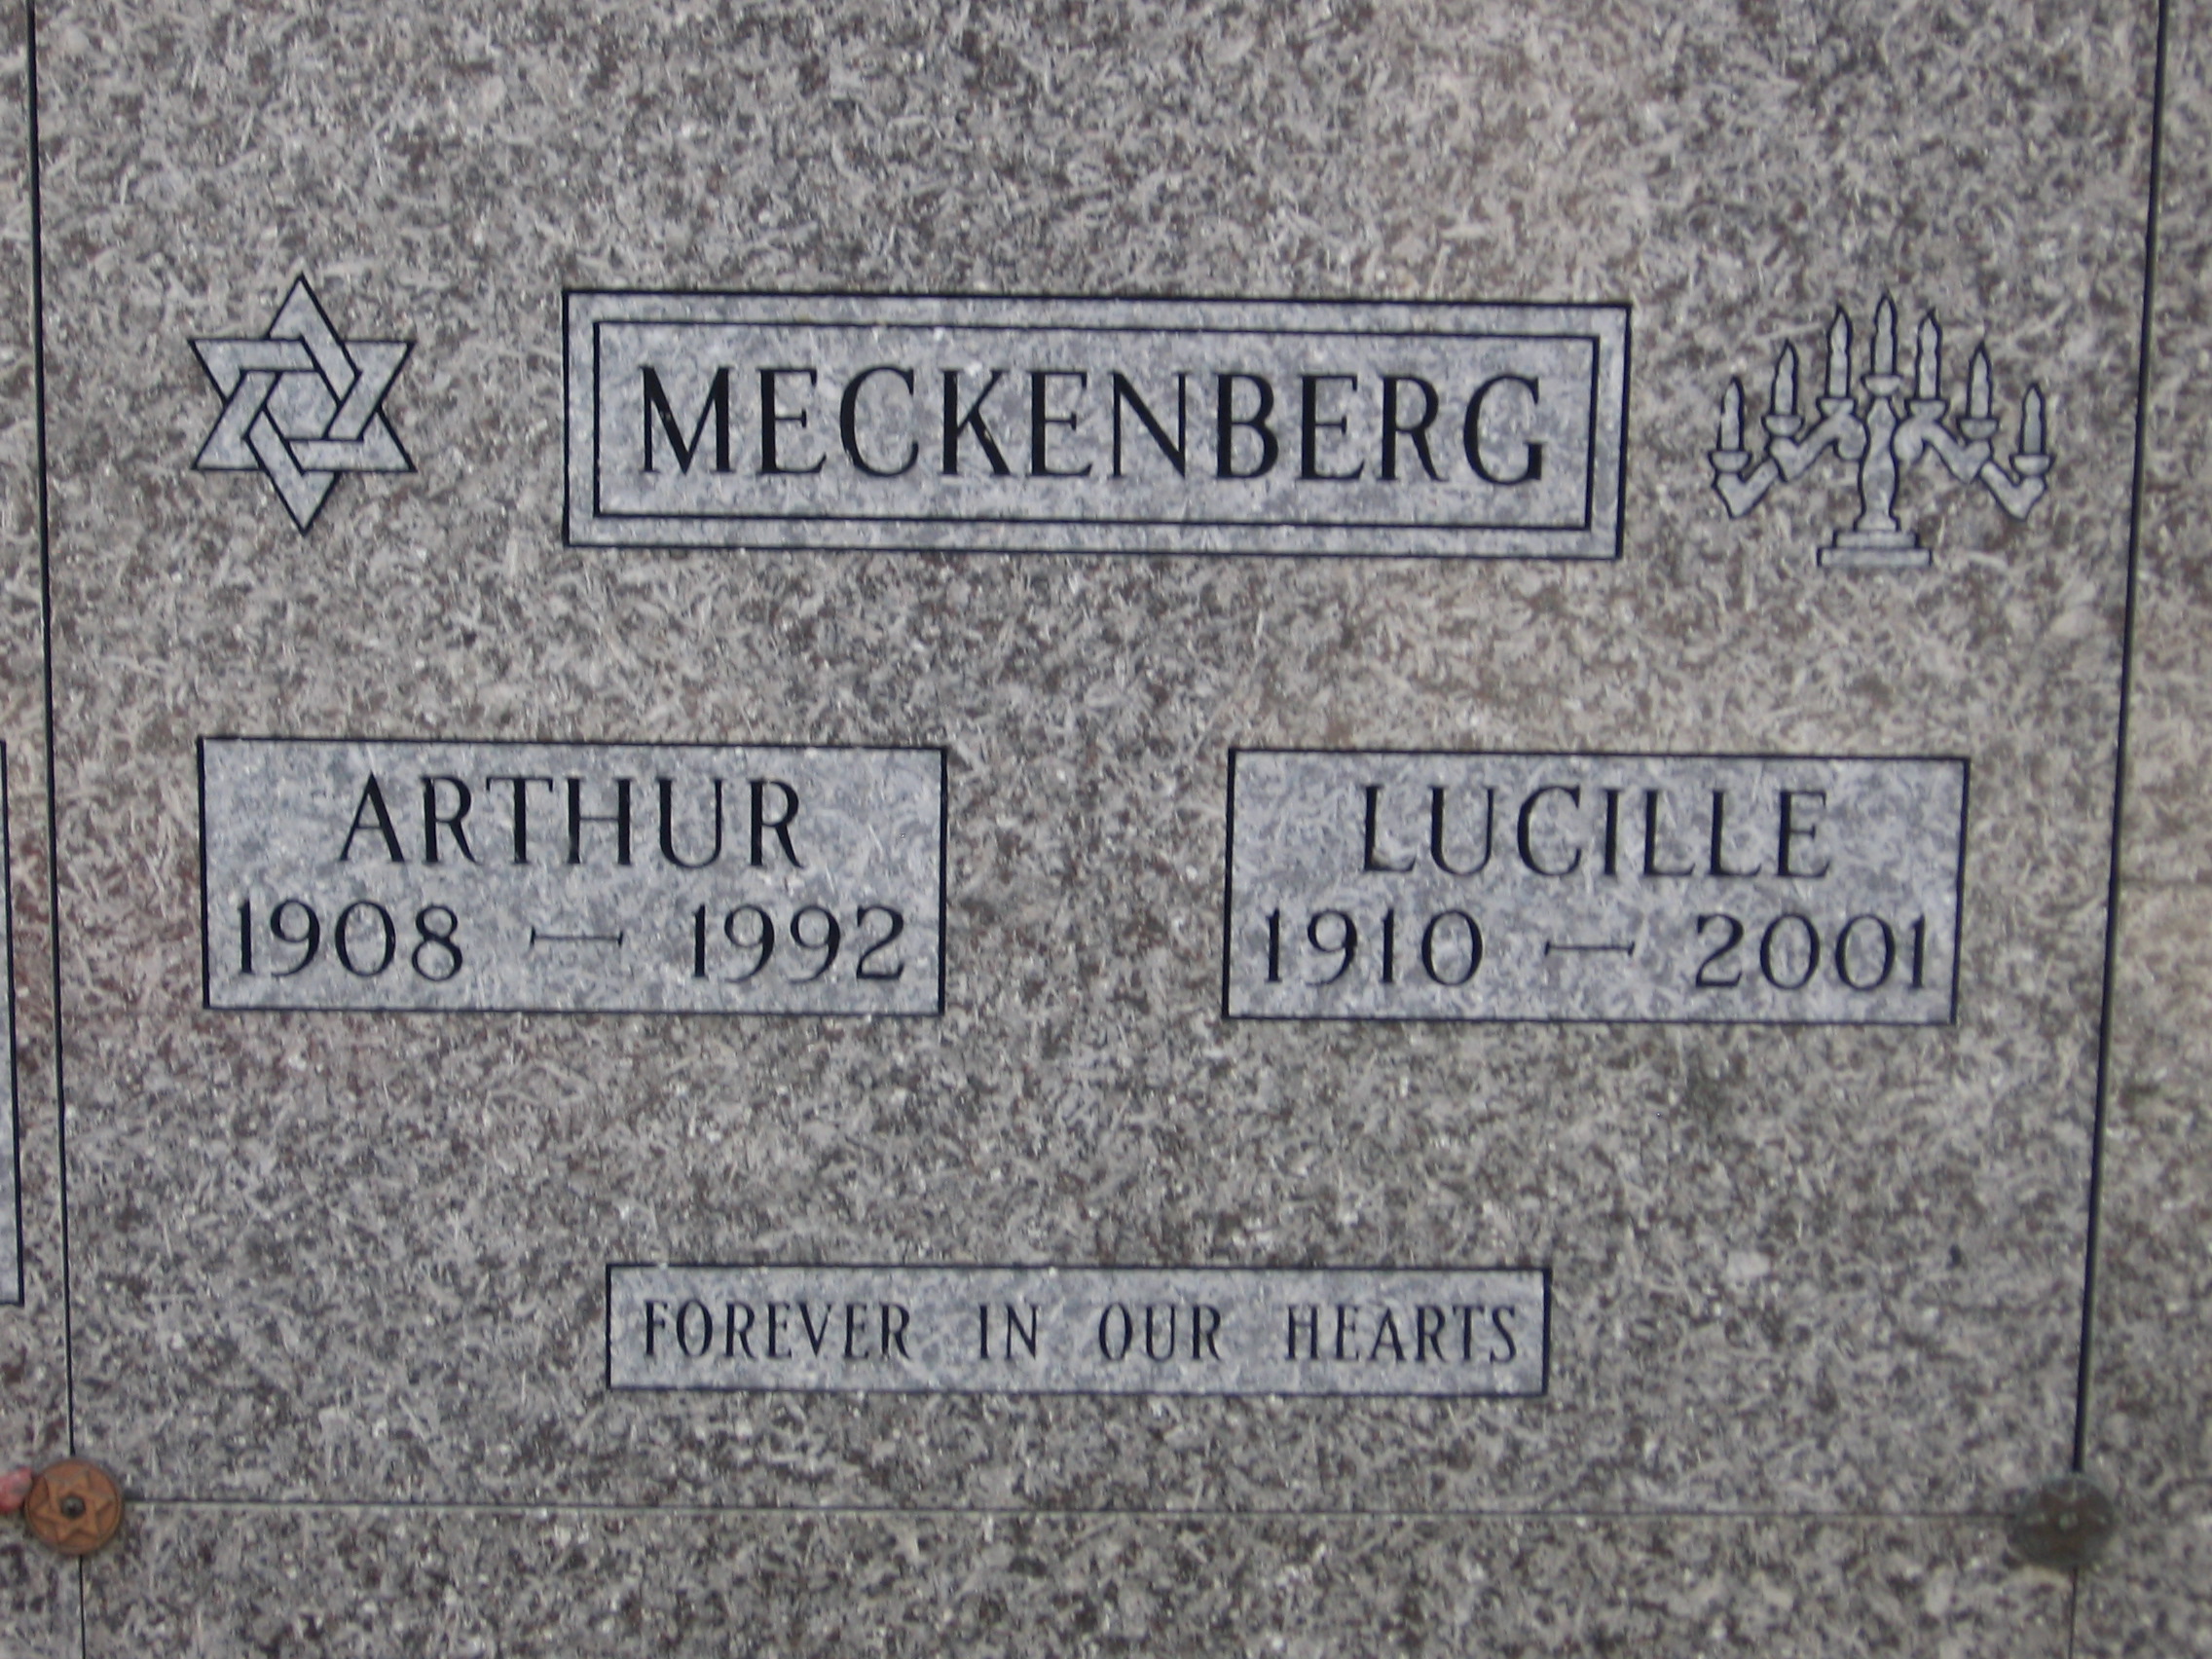 Arthur Meckenberg